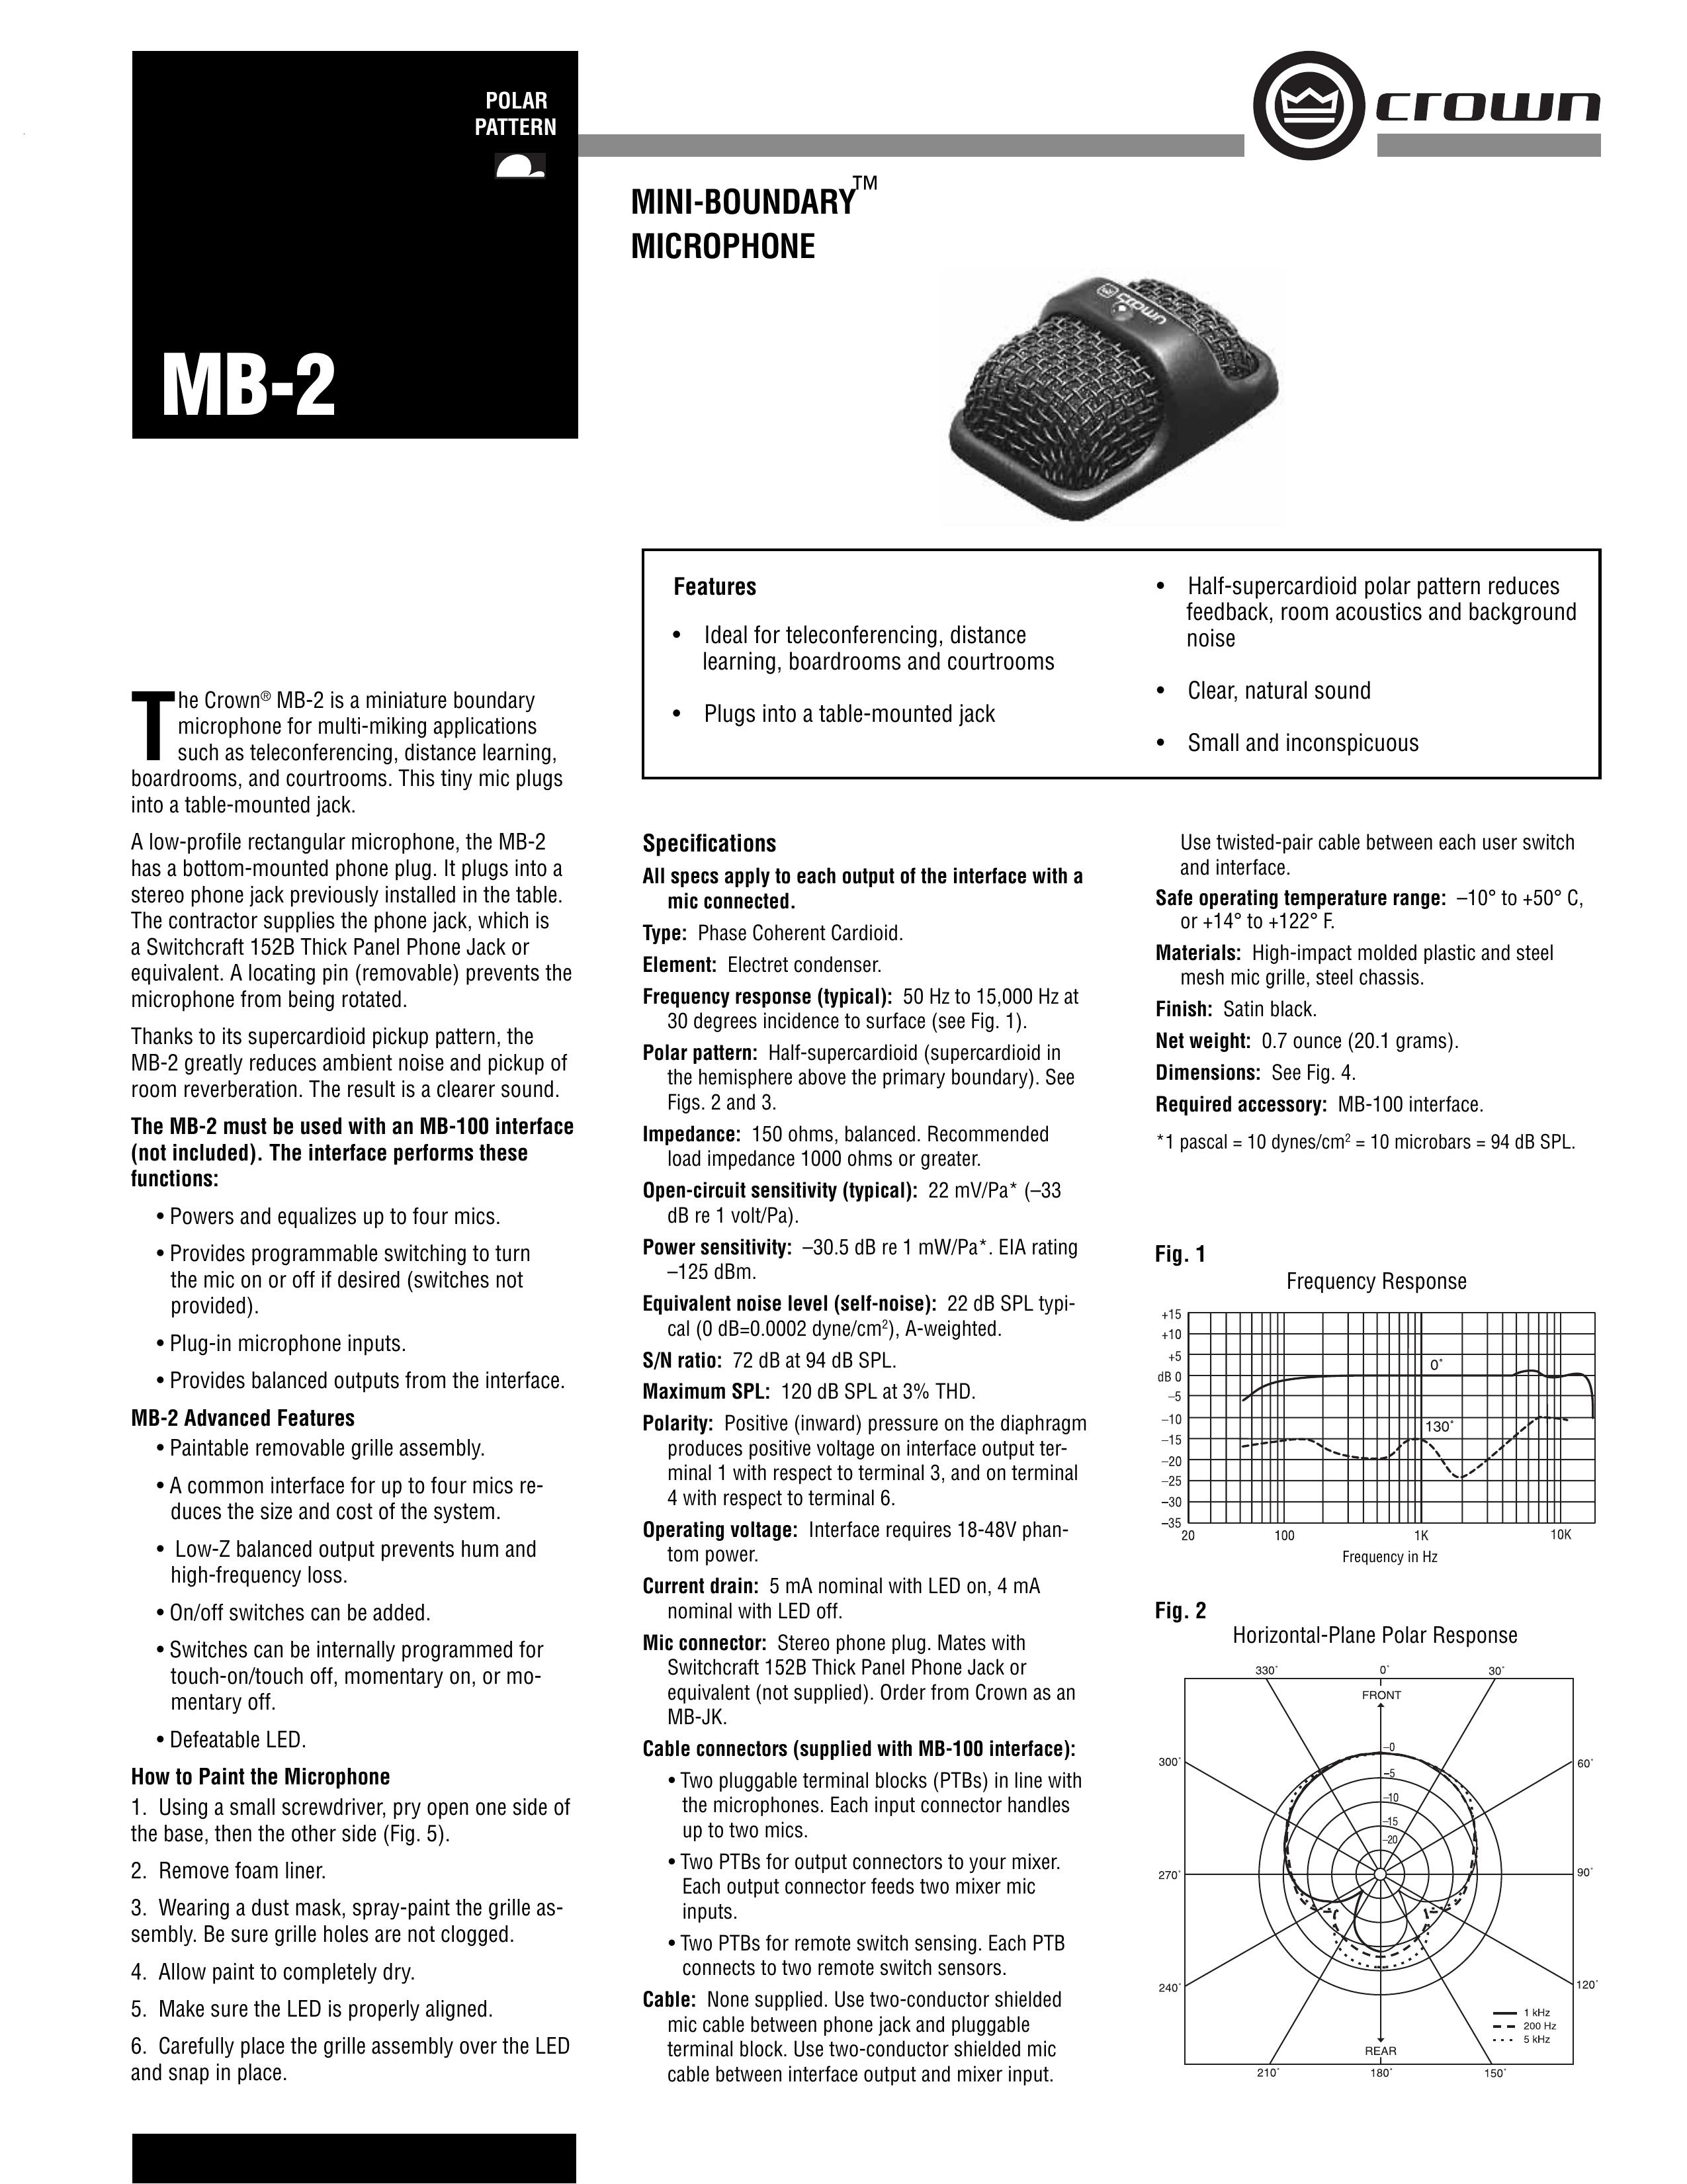 Crown Audio MB-2 Microphone User Manual